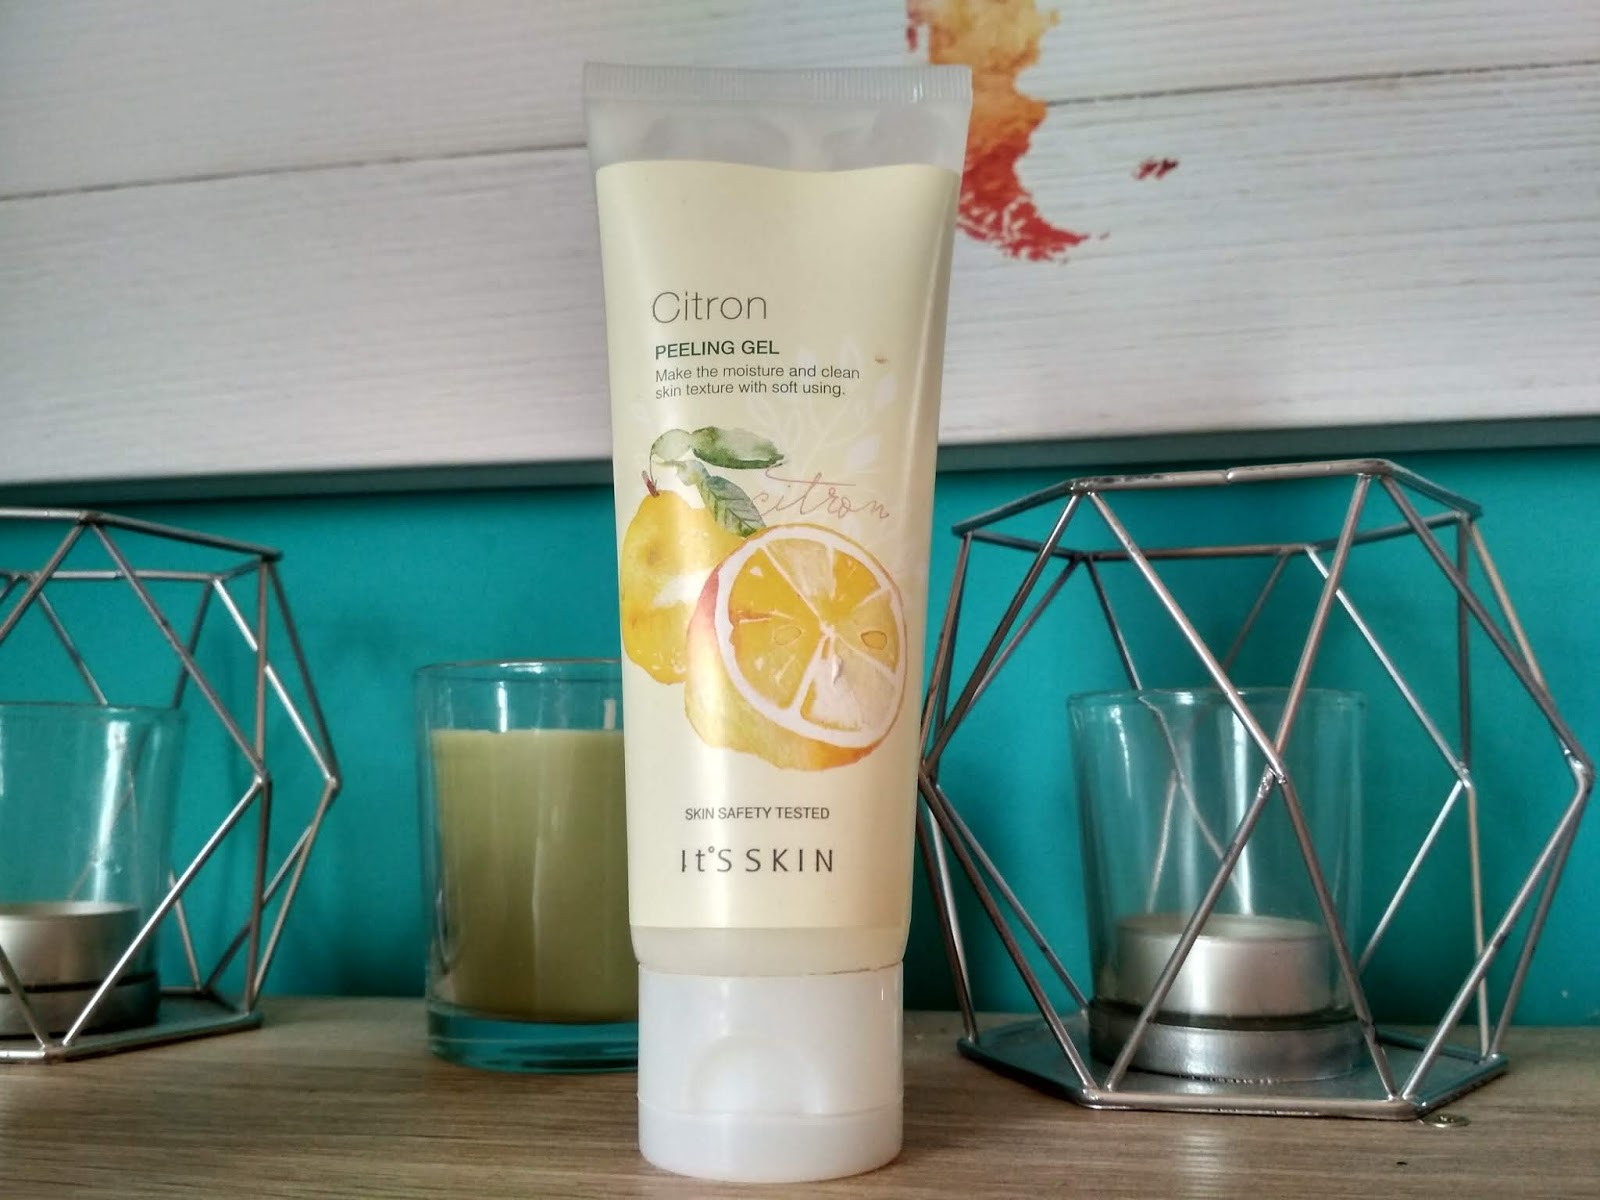 Recenzja - It's skin Citron peeling gel | N. o kosmetykach